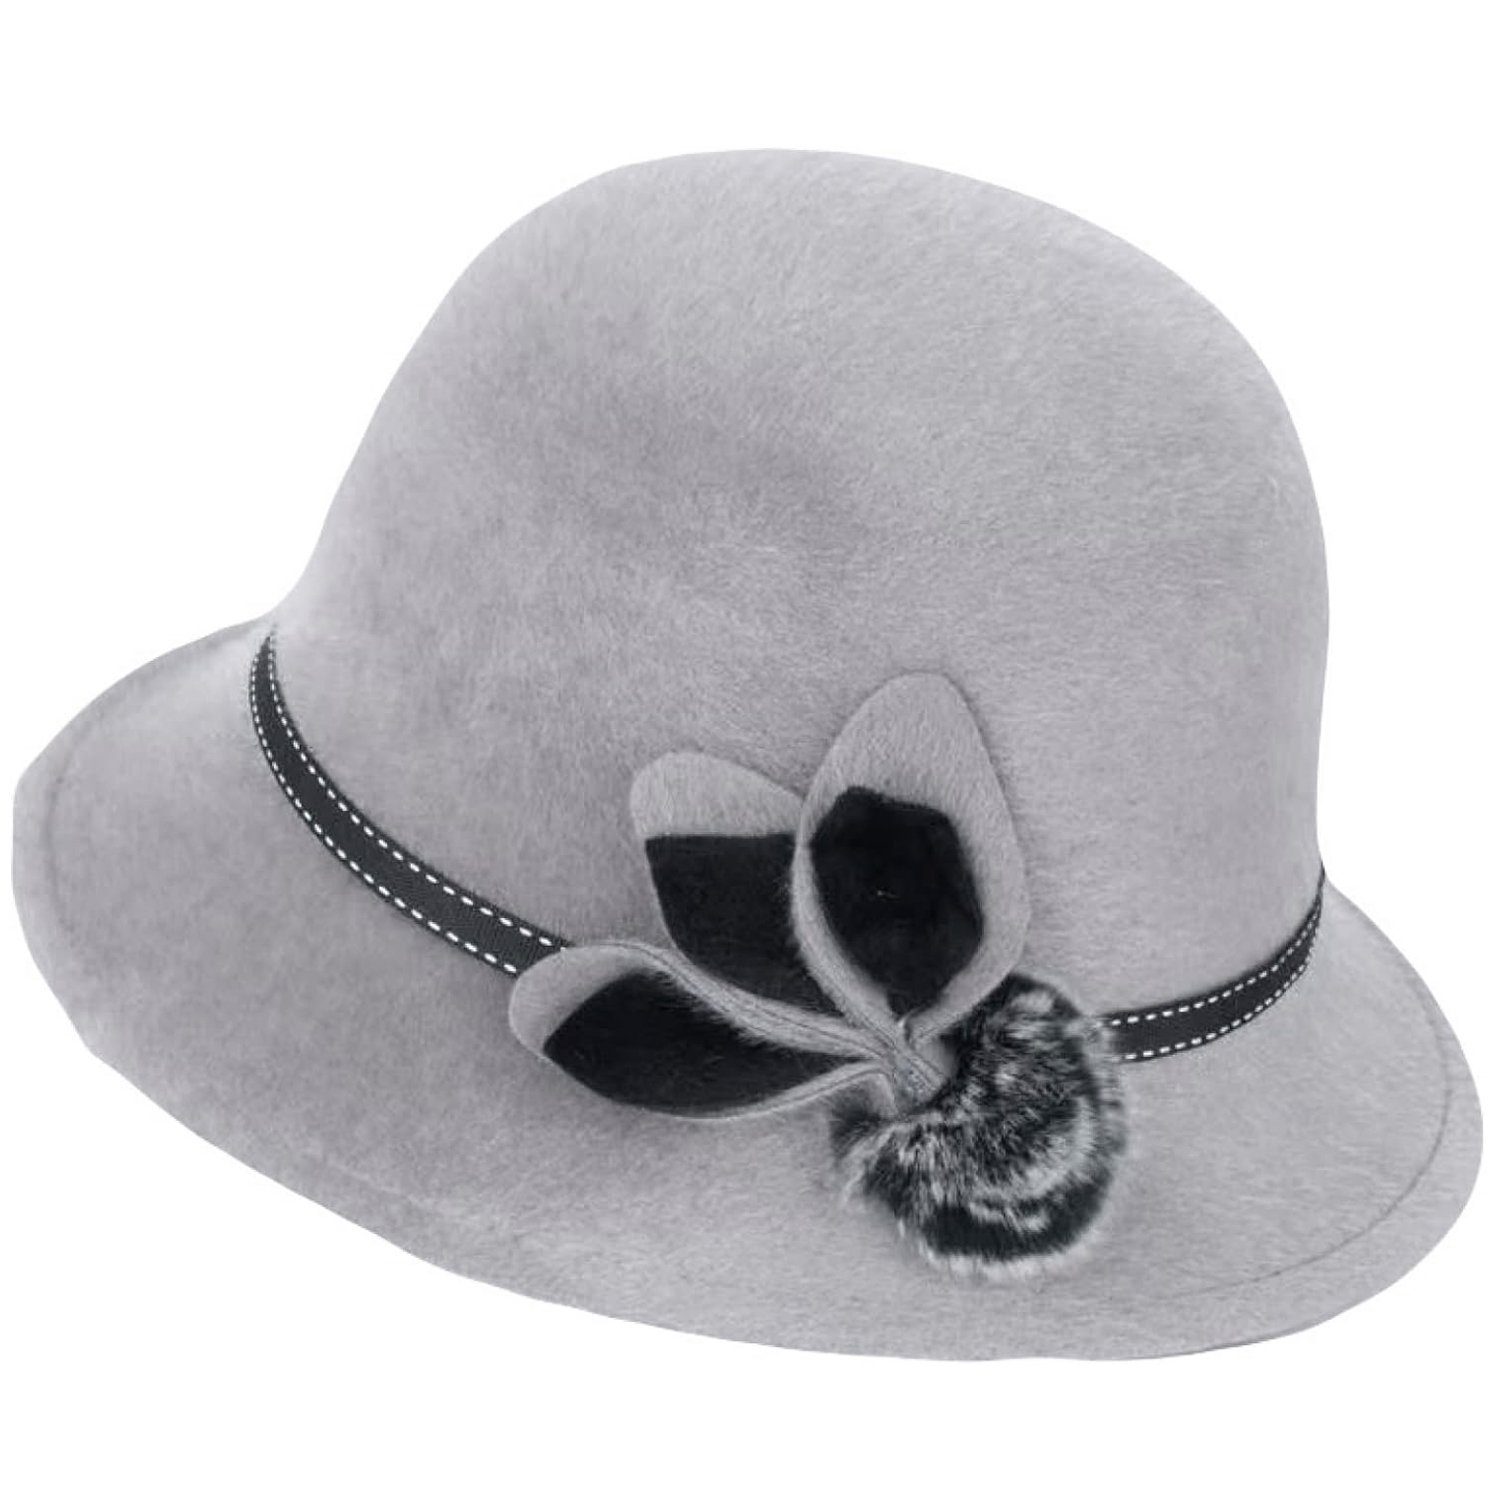 Wollfilz Filzhut Damen elegante grau Fischerhüte Fedora MAGICSHE Hut Vintage